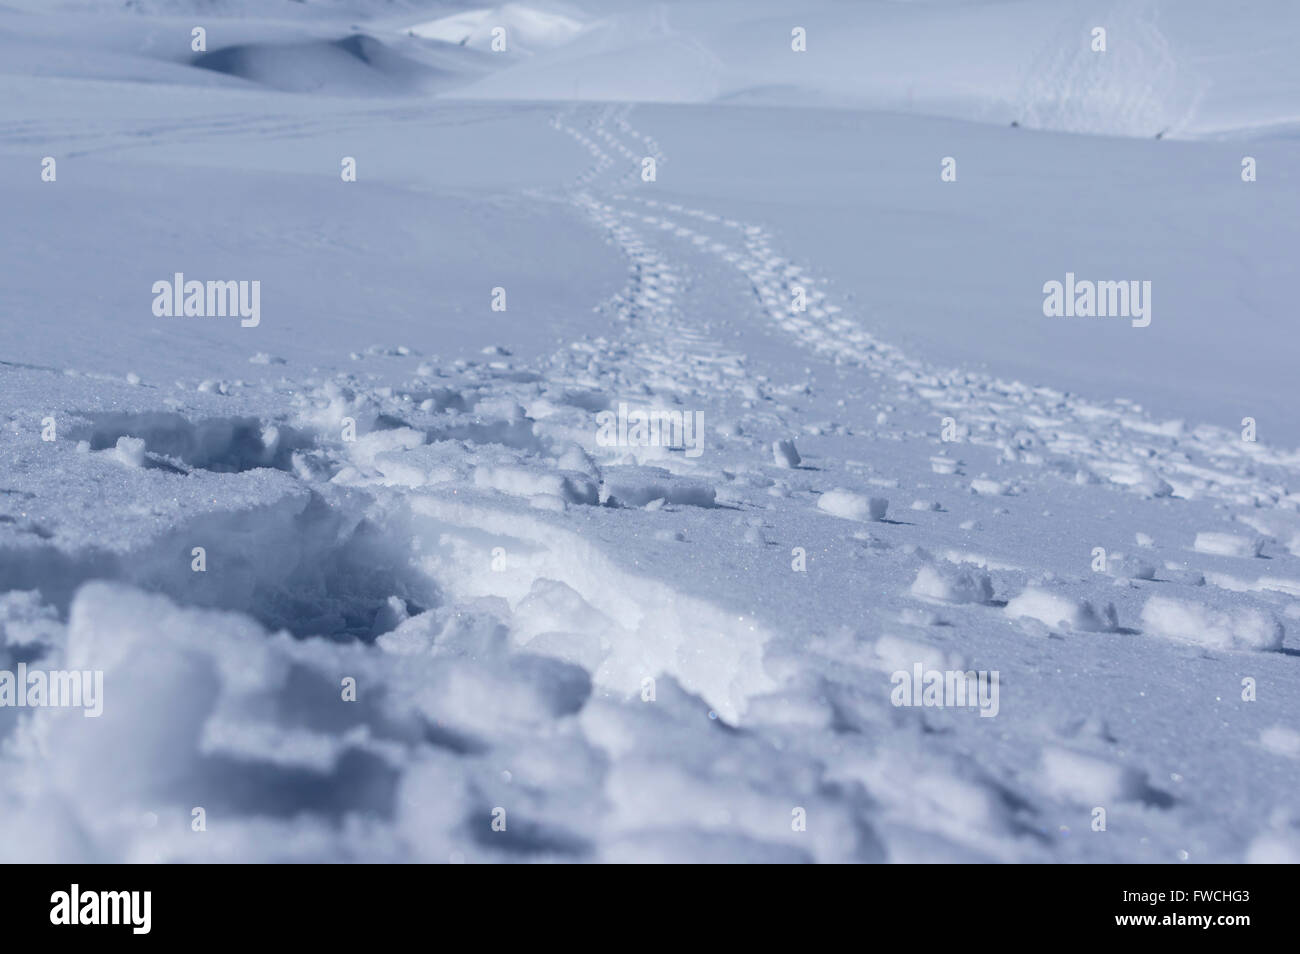 Footprint tracks in deep snow, vanishing in the far distance. Stock Photo